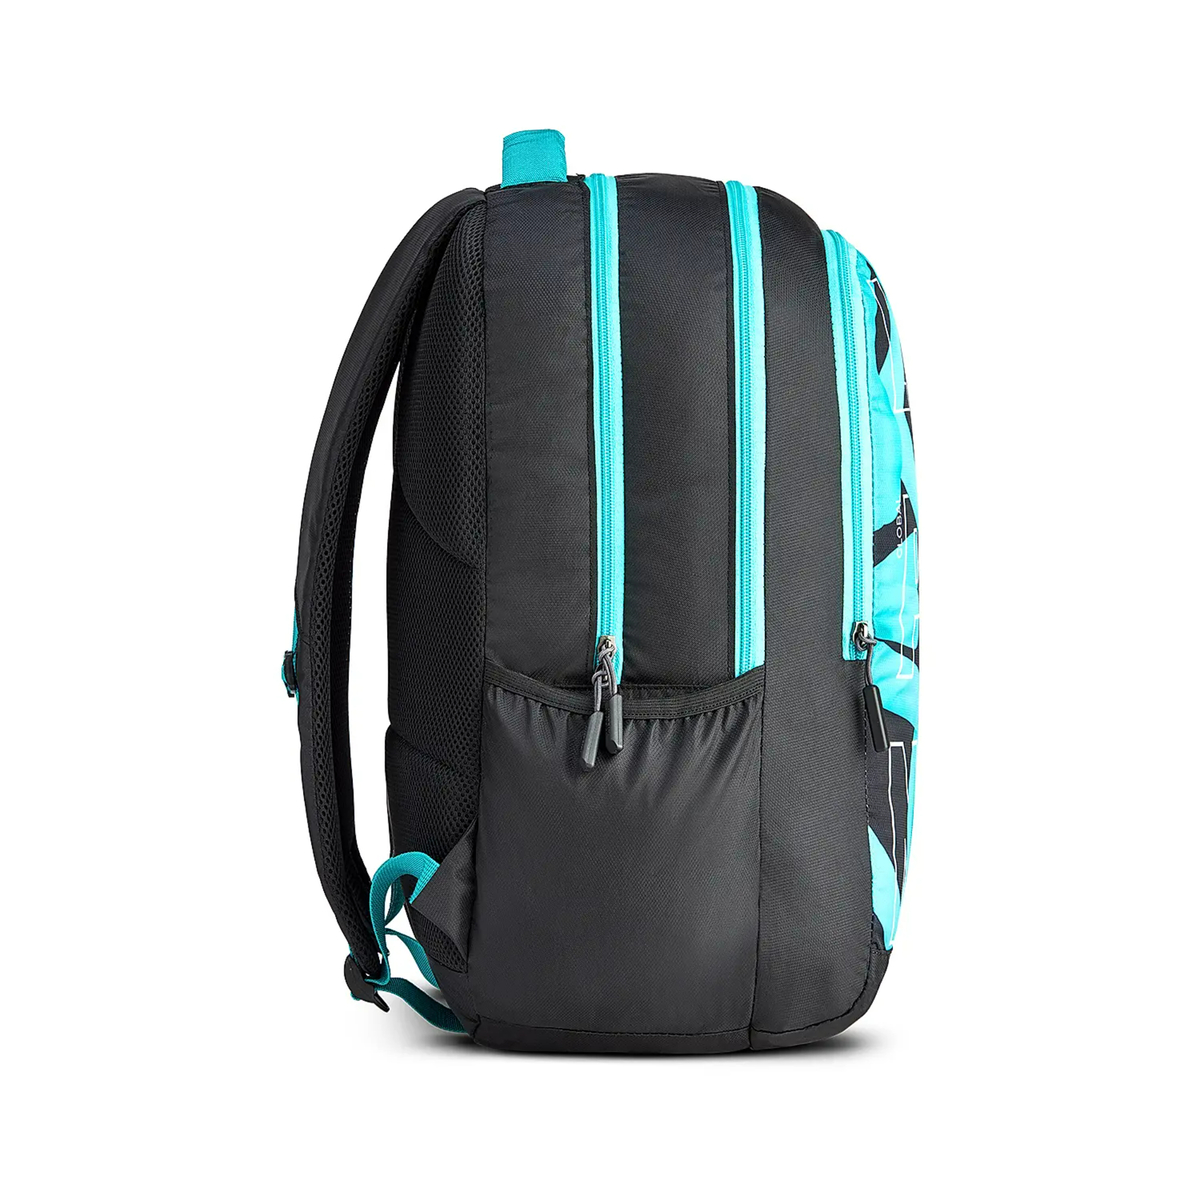 American Tourister Quad 2.0 School Backpack,  29 L Volume, Black, GAT104